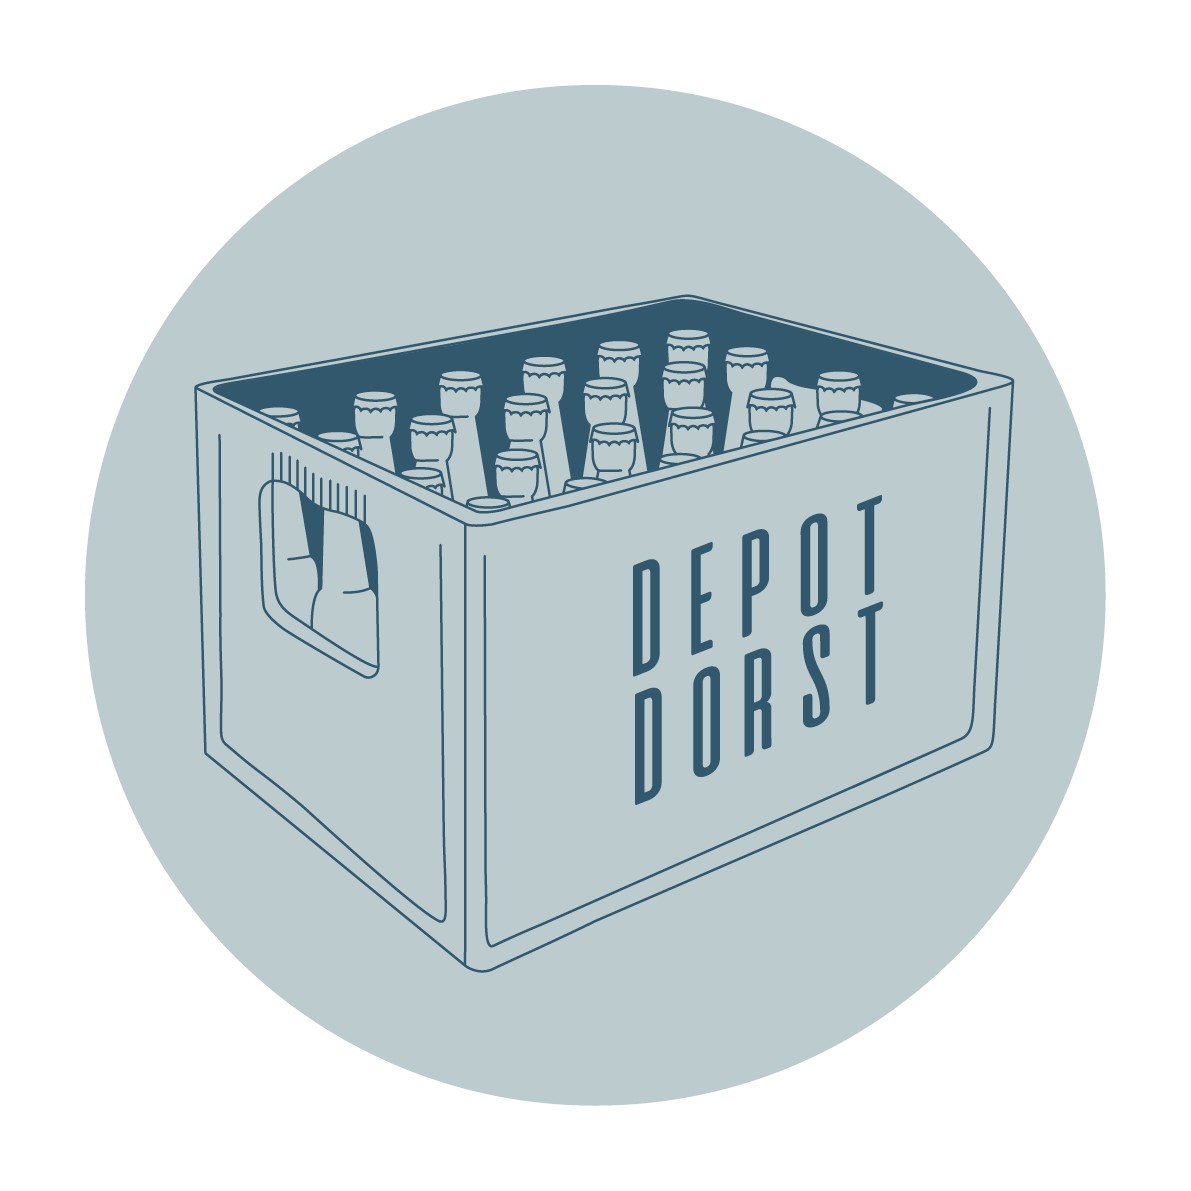 Depot Dorst bv